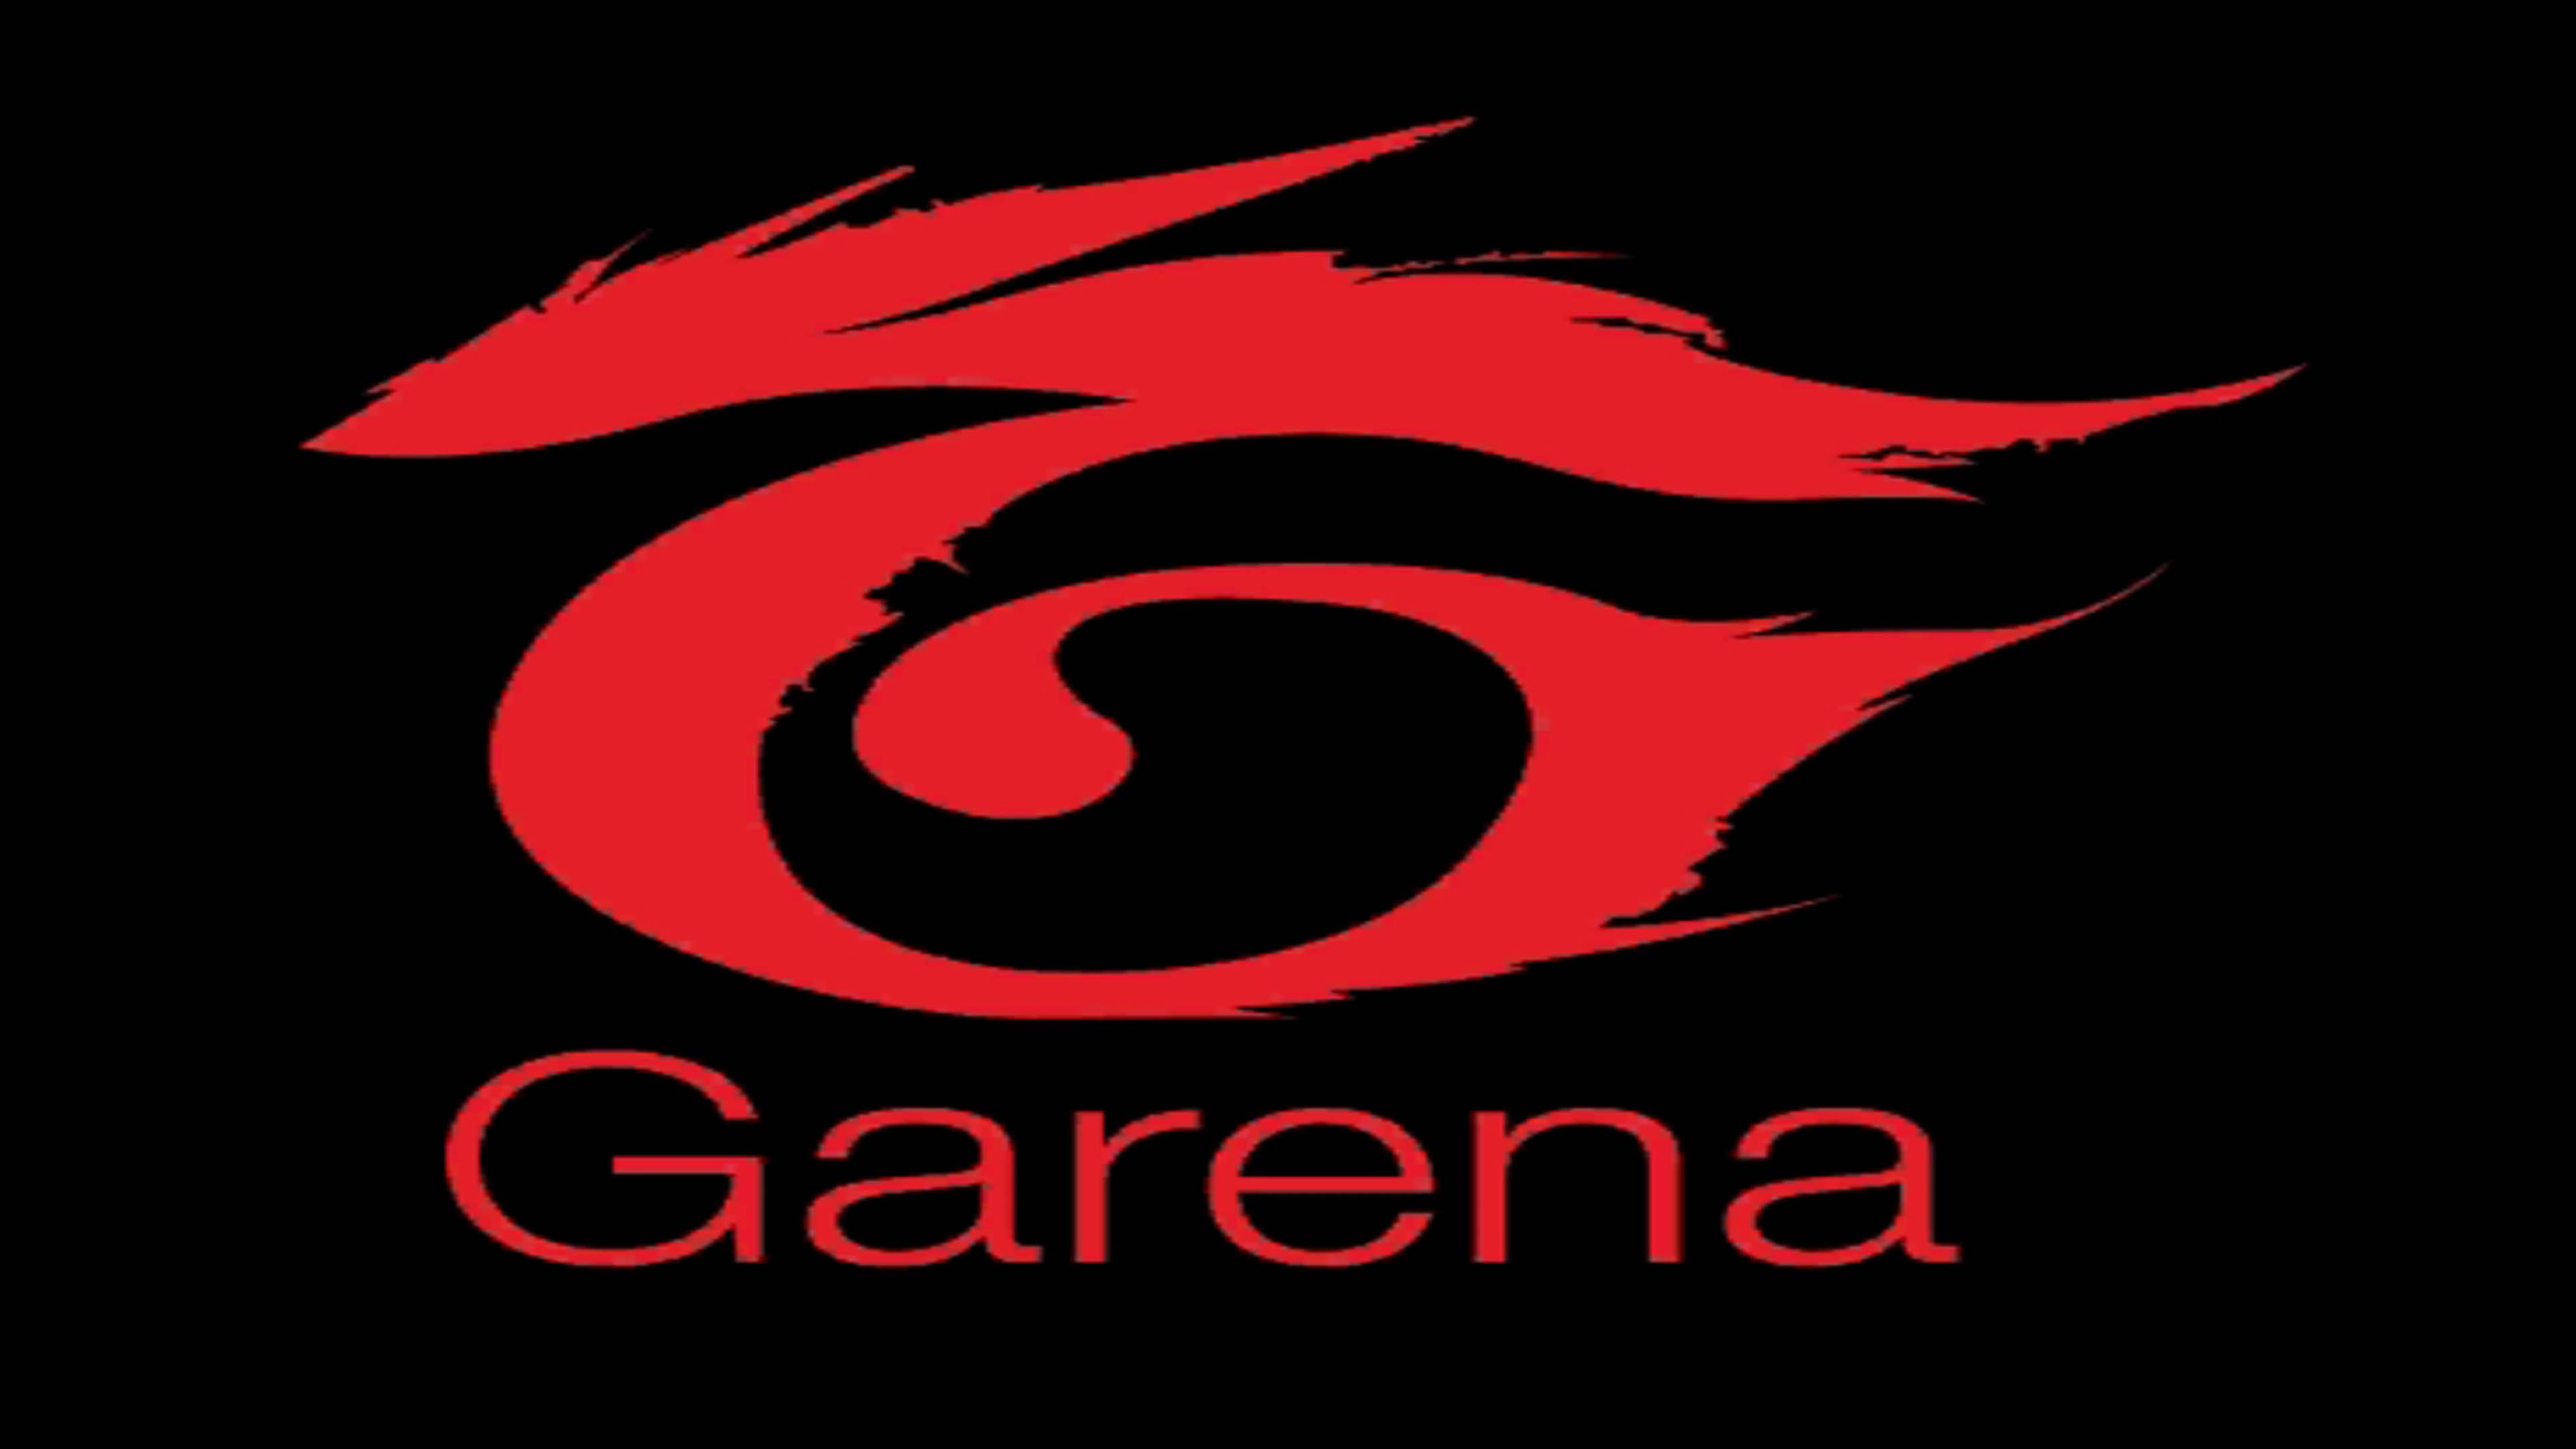 Download Free 100 + garena logo download Wallpapers